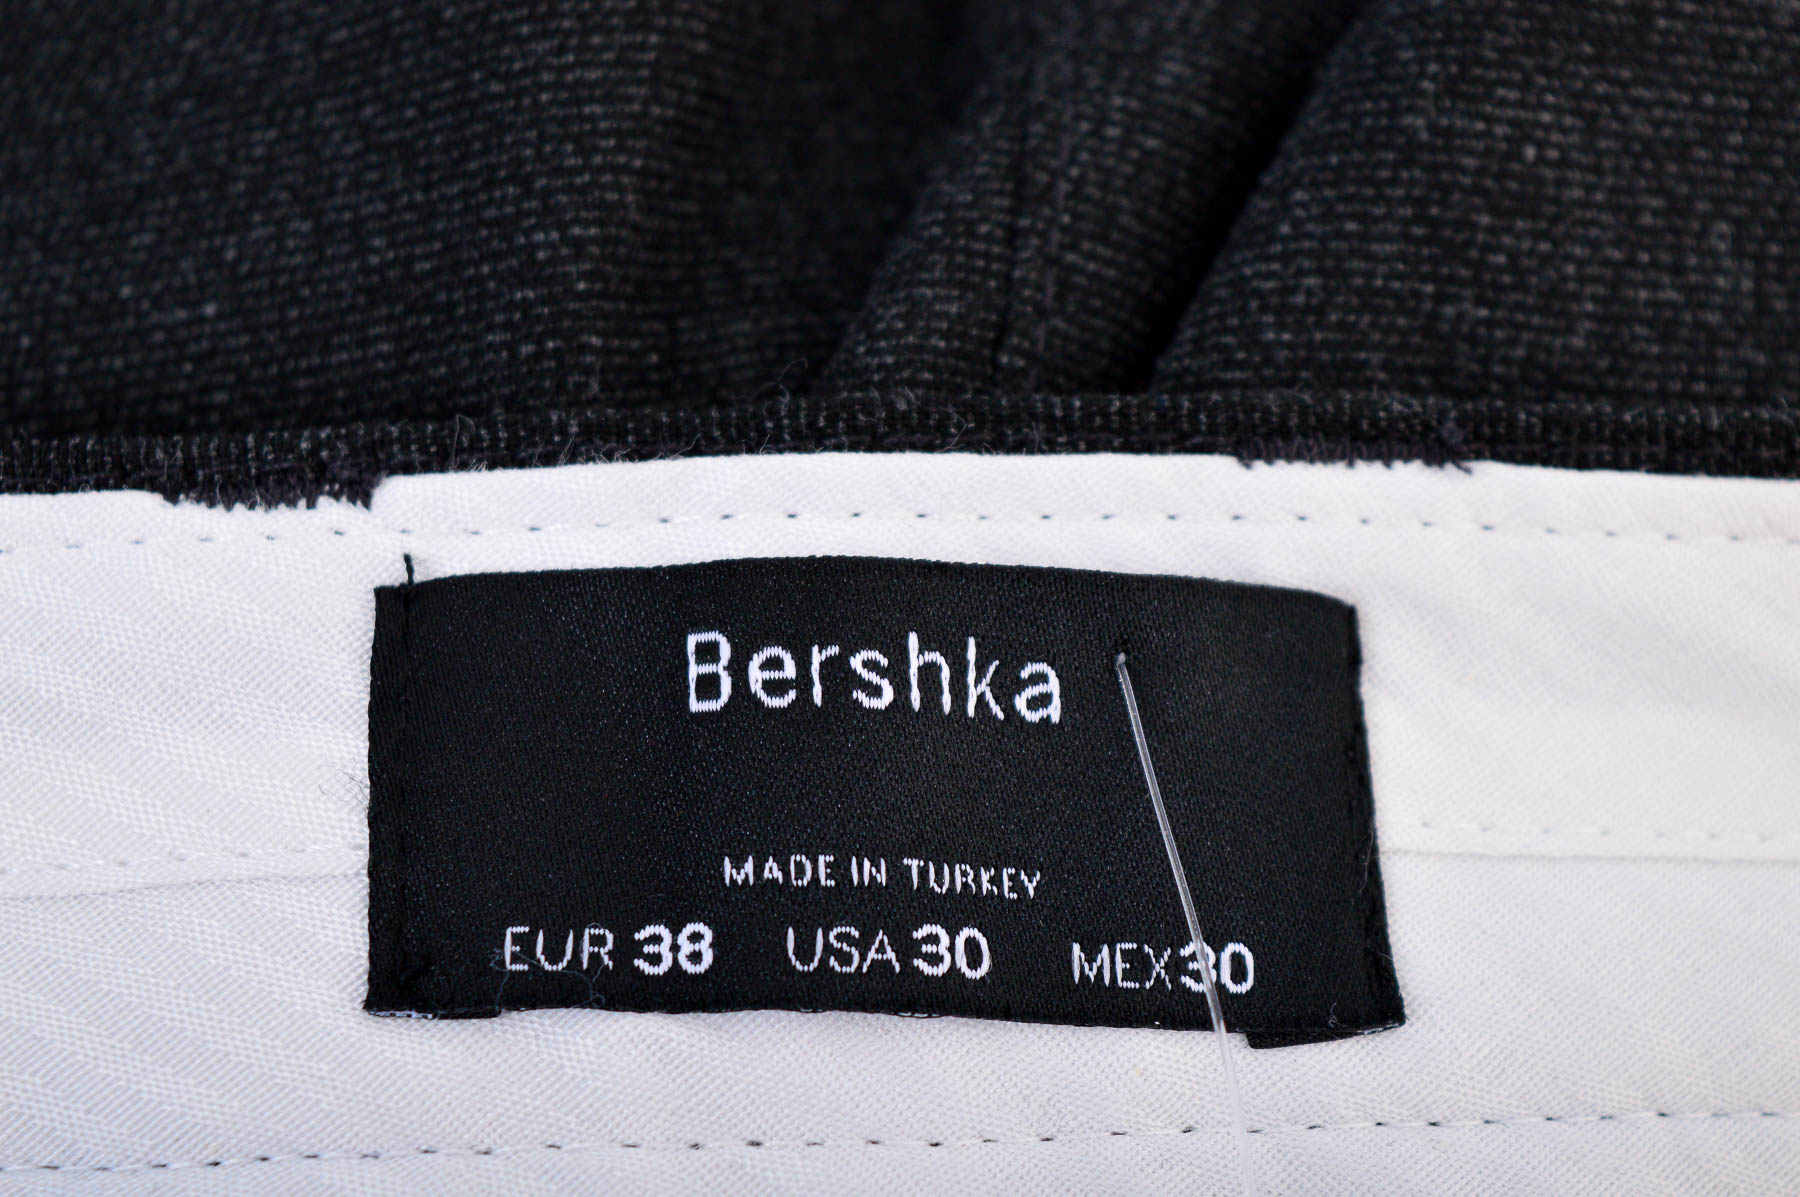 Men's trousers - Bershka - 2